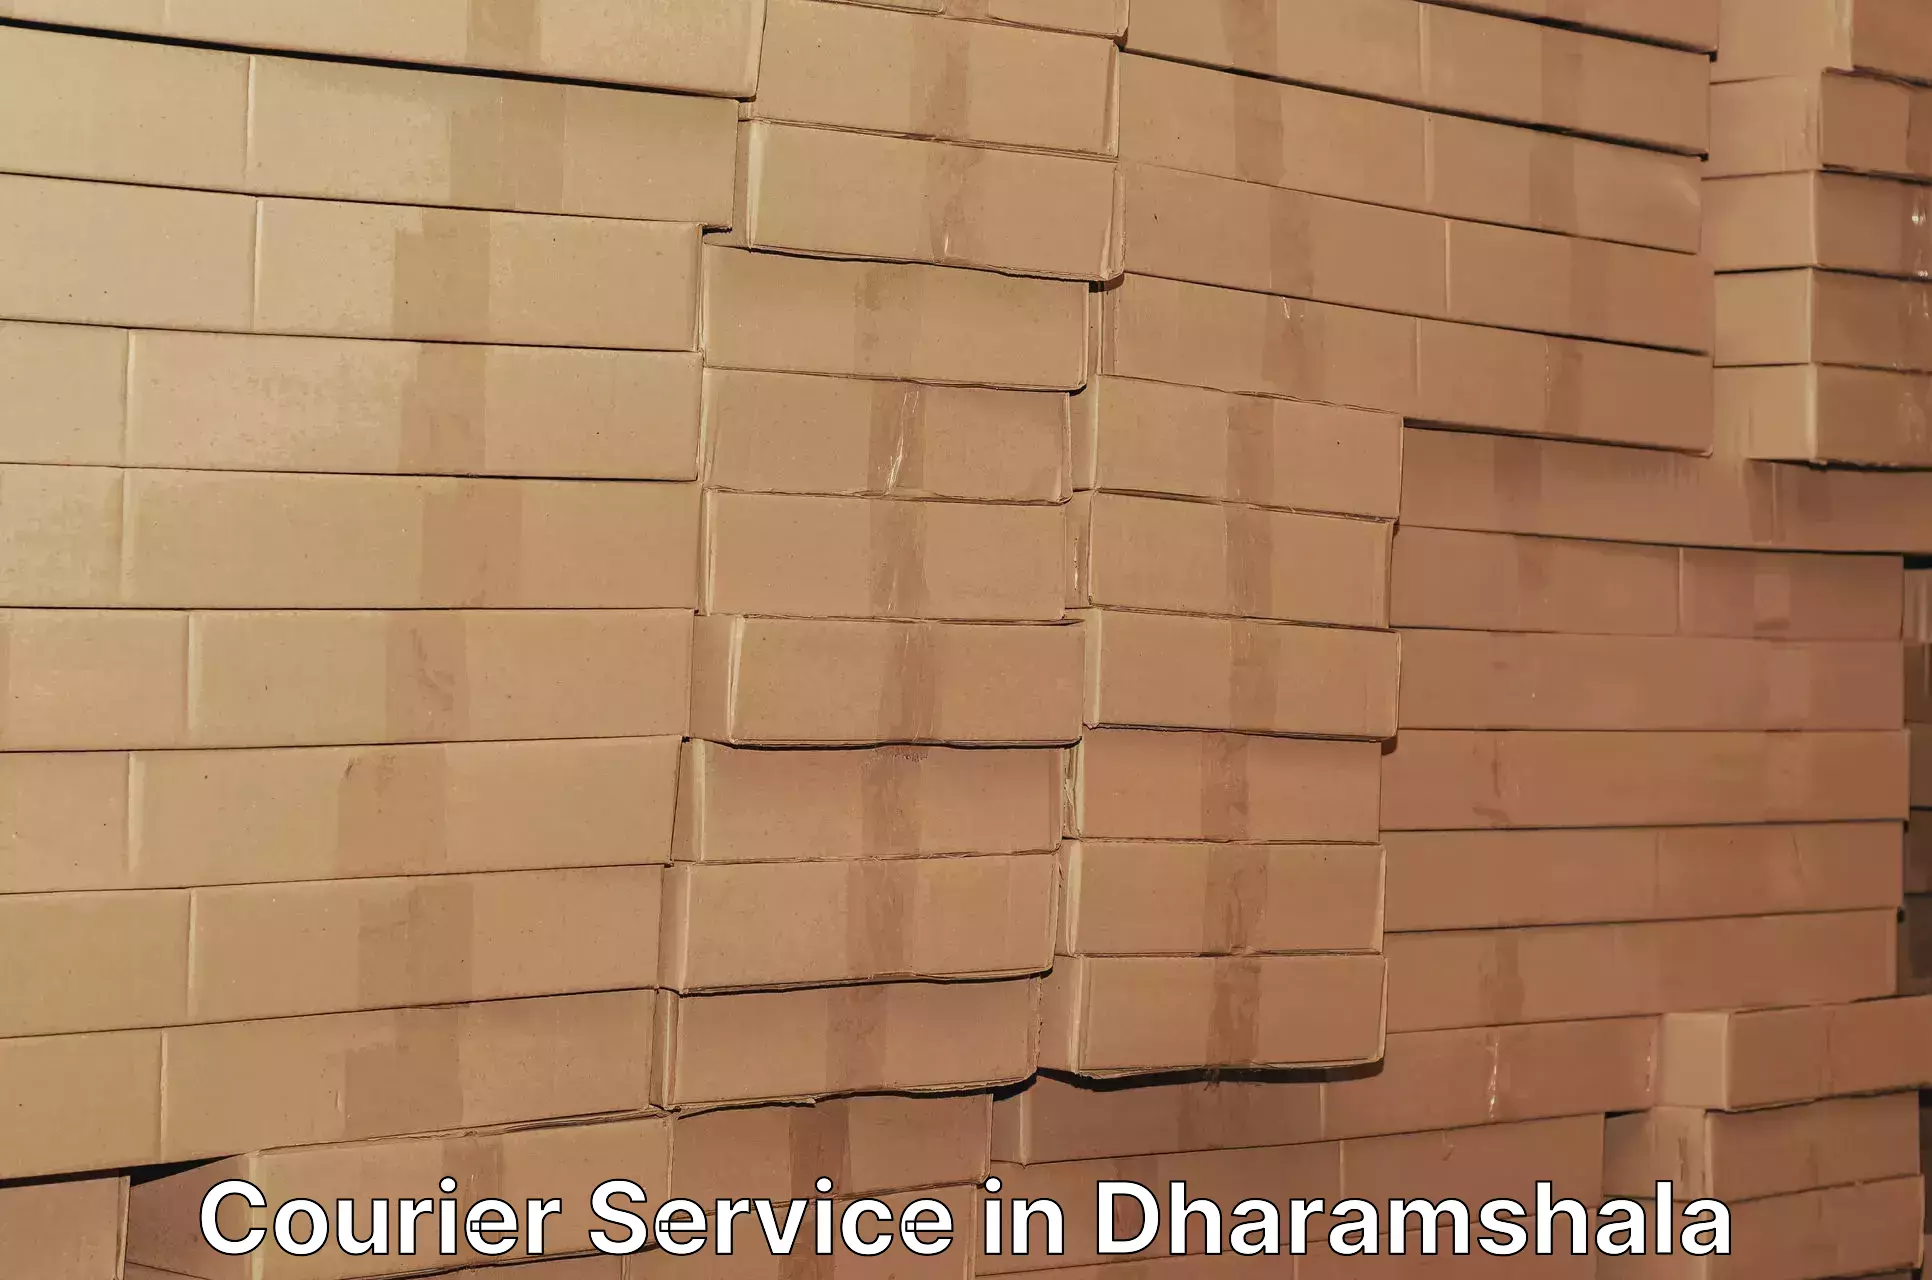 Modern delivery methods in Dharamshala